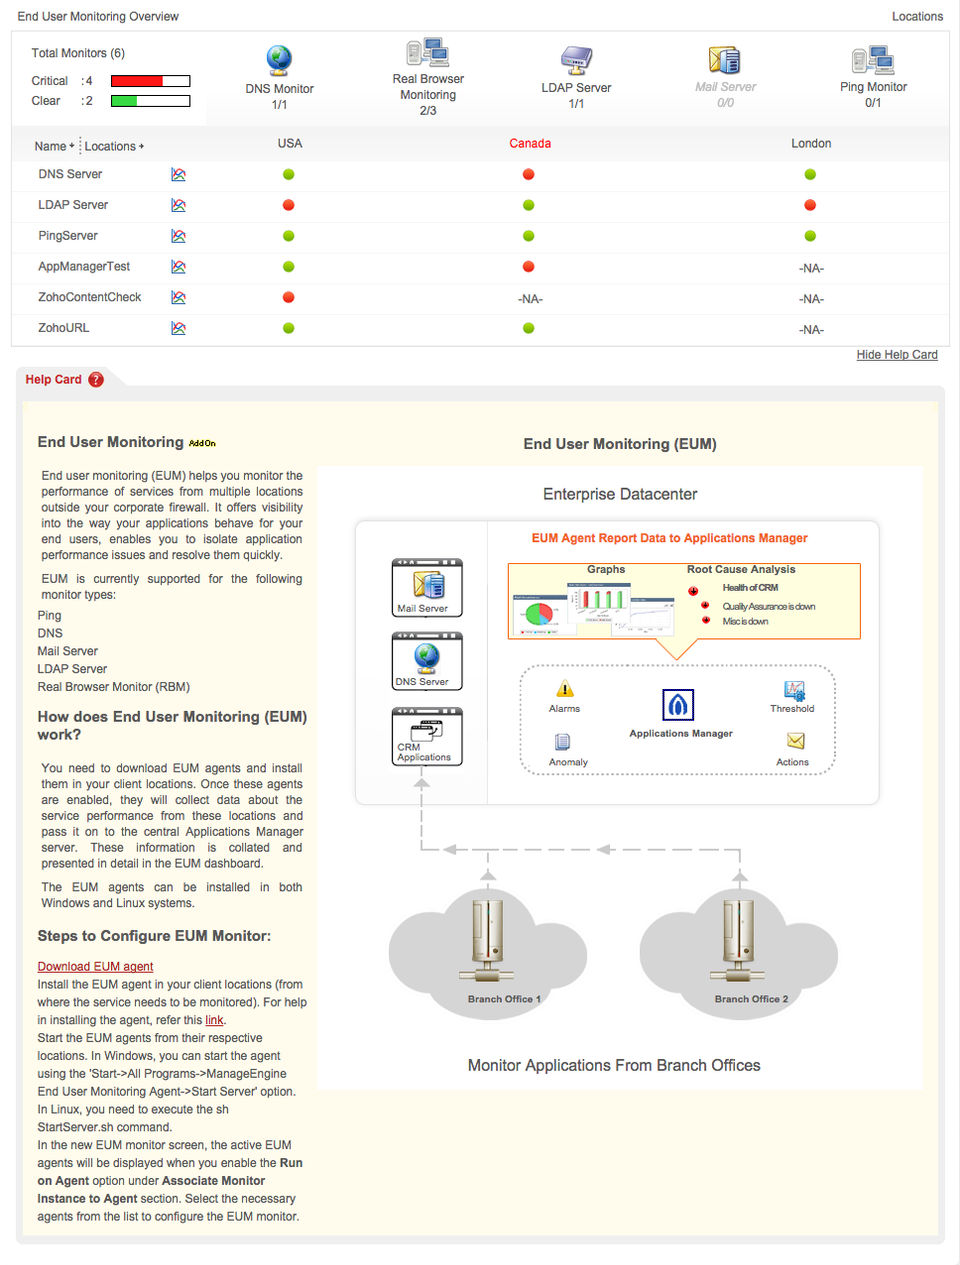 Applications Manager screenshot: 9. Real Browser Monitoring